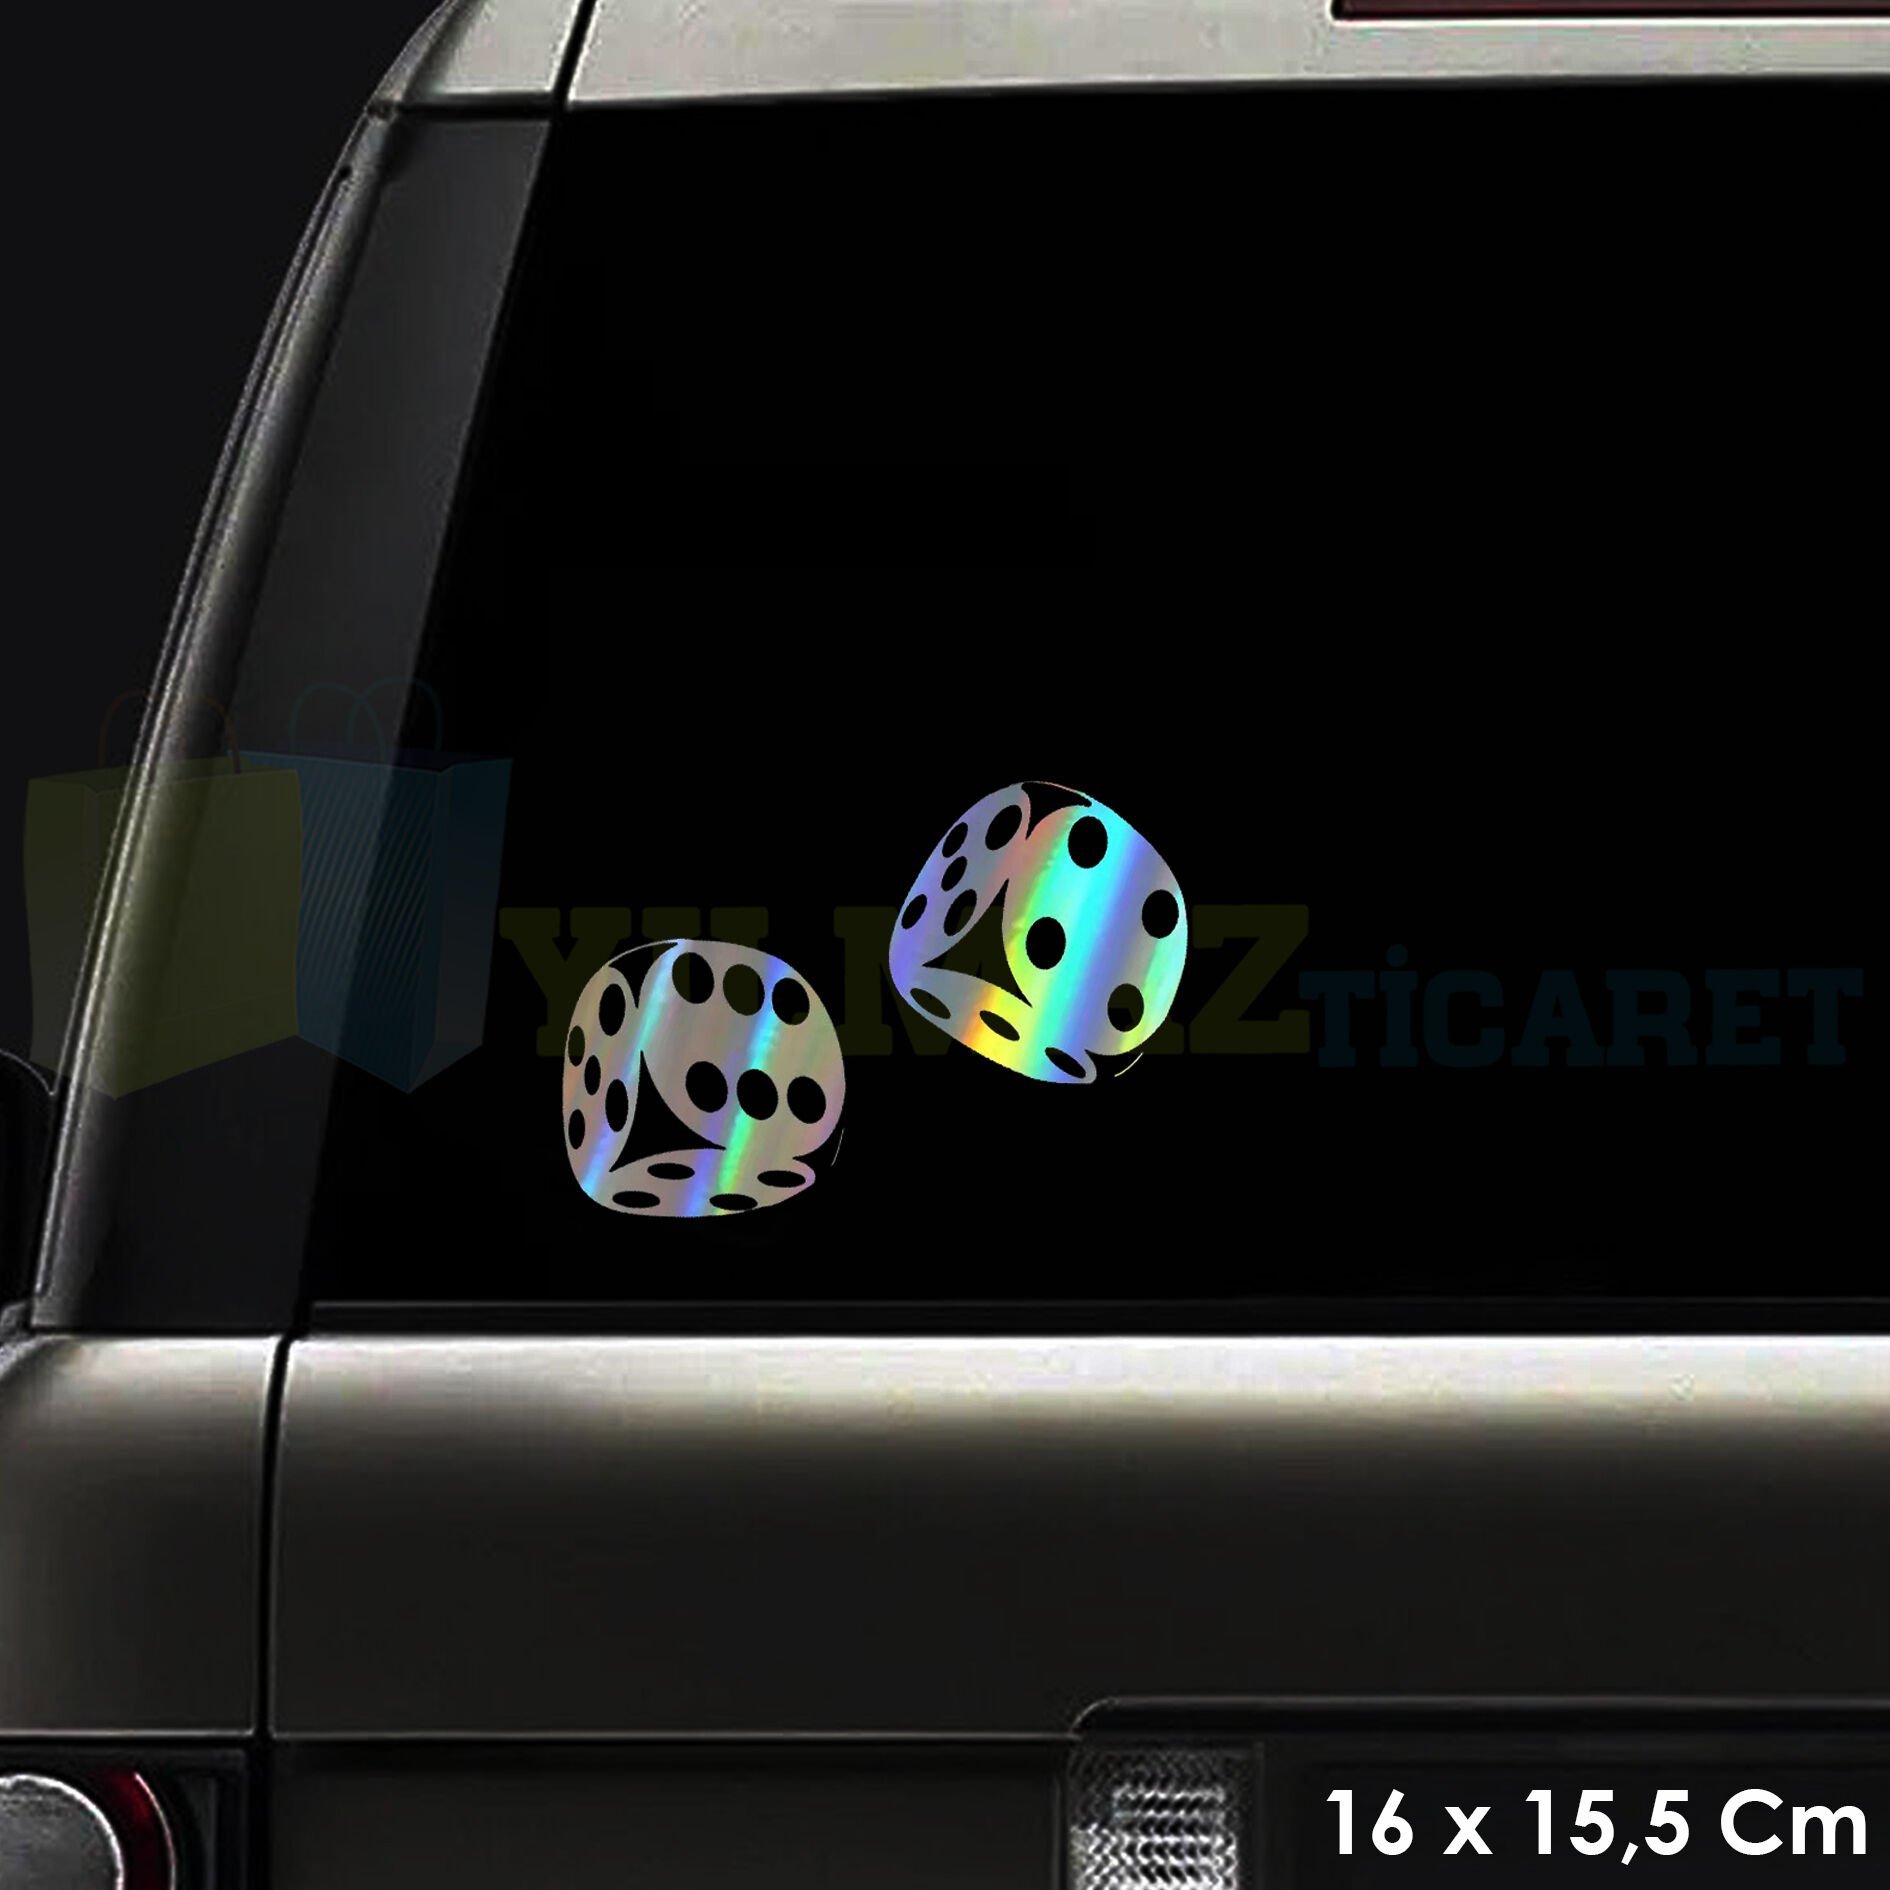 Zar Atma Araba Zar Hologram Oto Sticker Araba Etiket Çıkartma Renkli Aksesuar 16 x 15,5 Cm